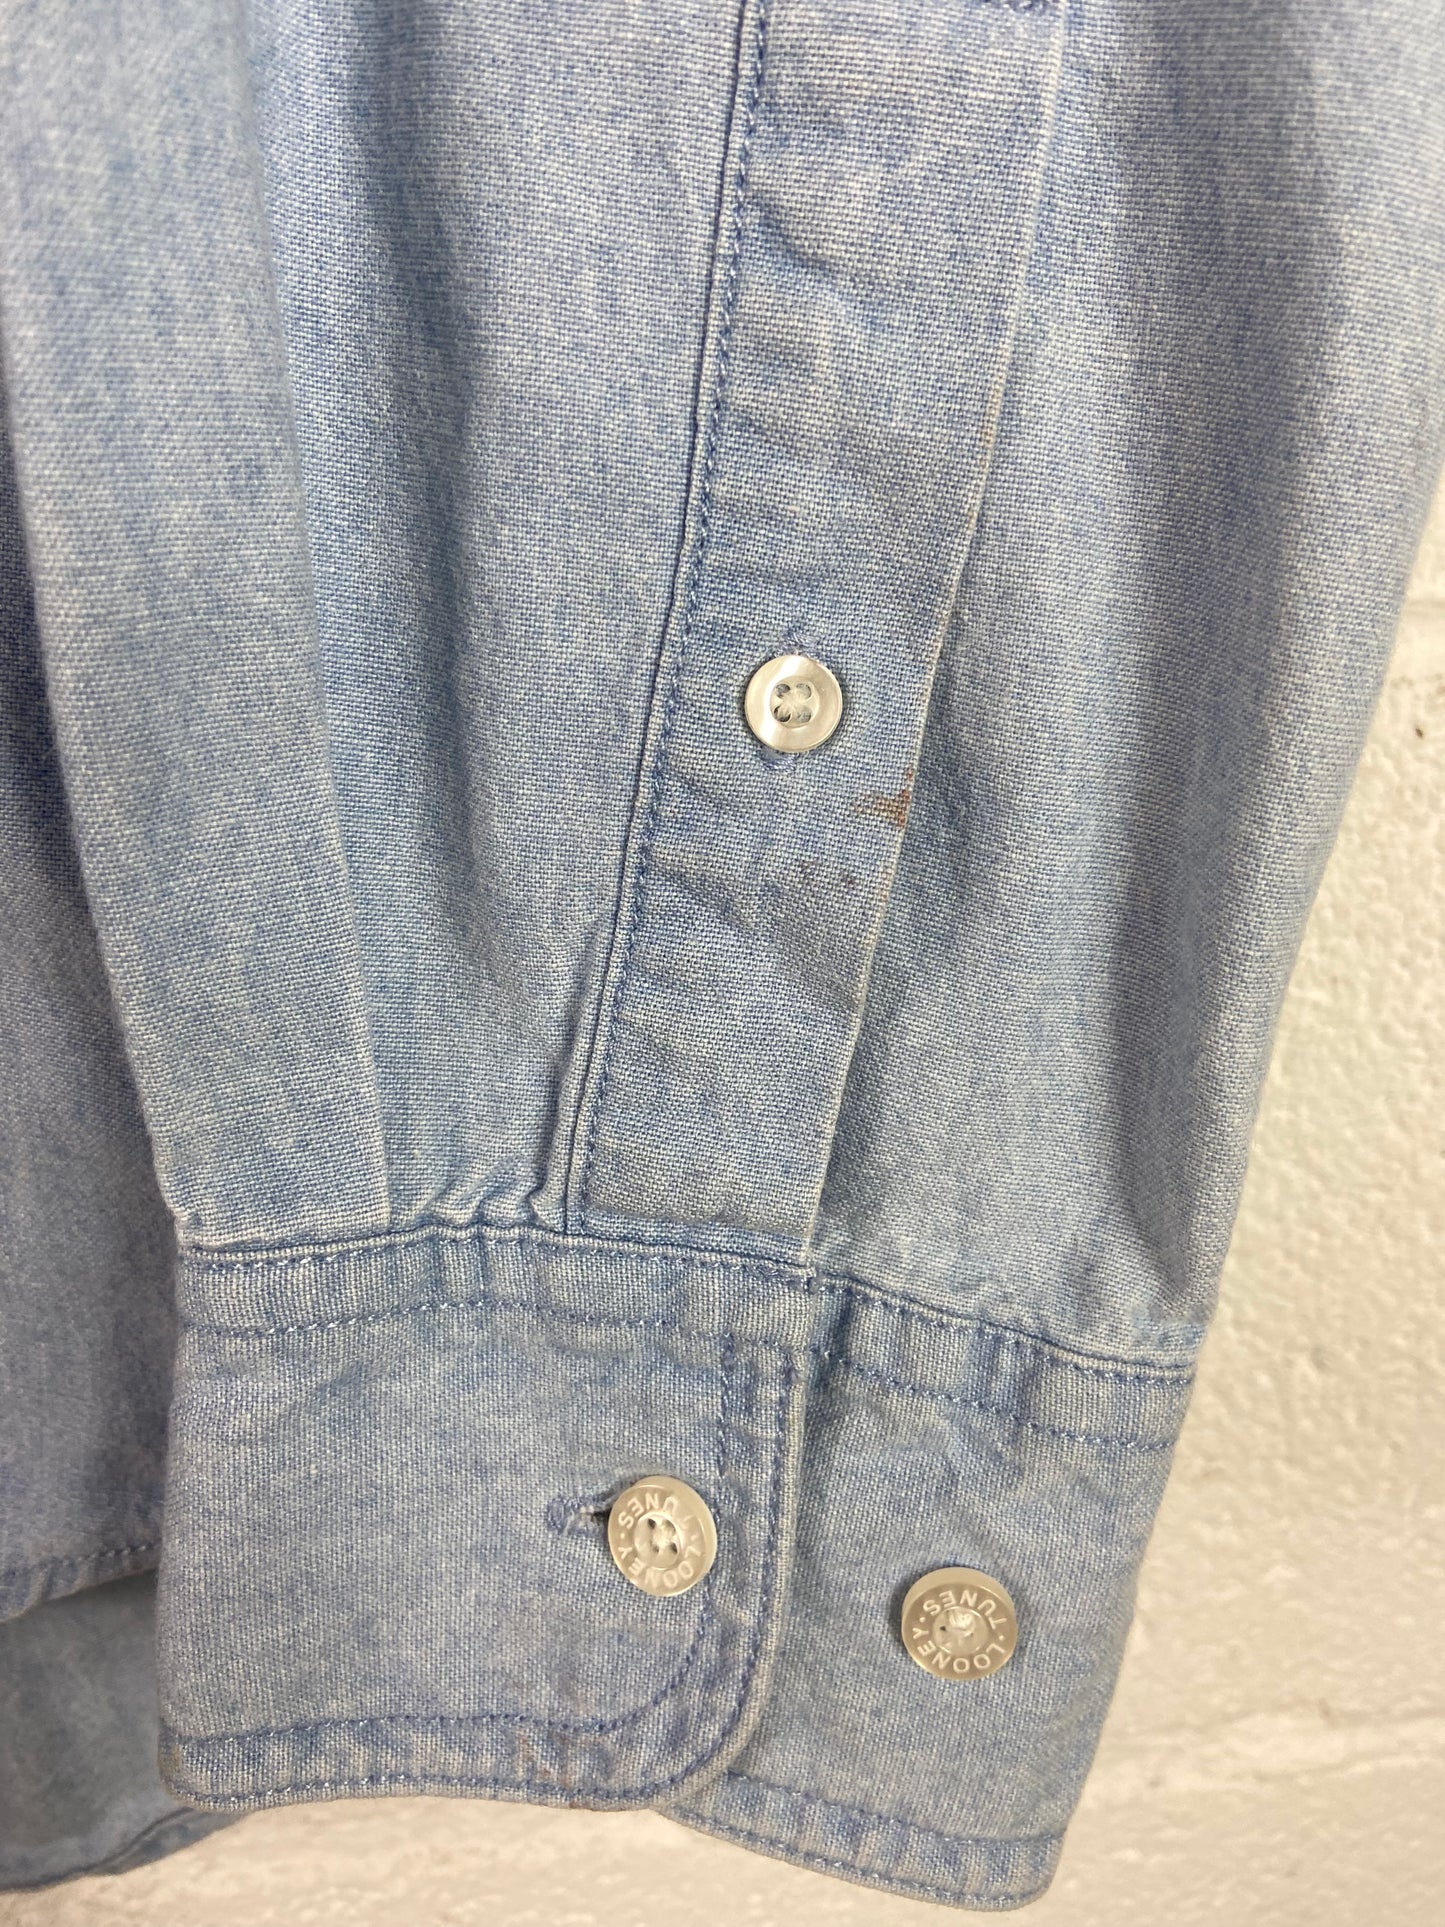 VTG Taz Embroidered Denim Button Up Shirt Sz S/M